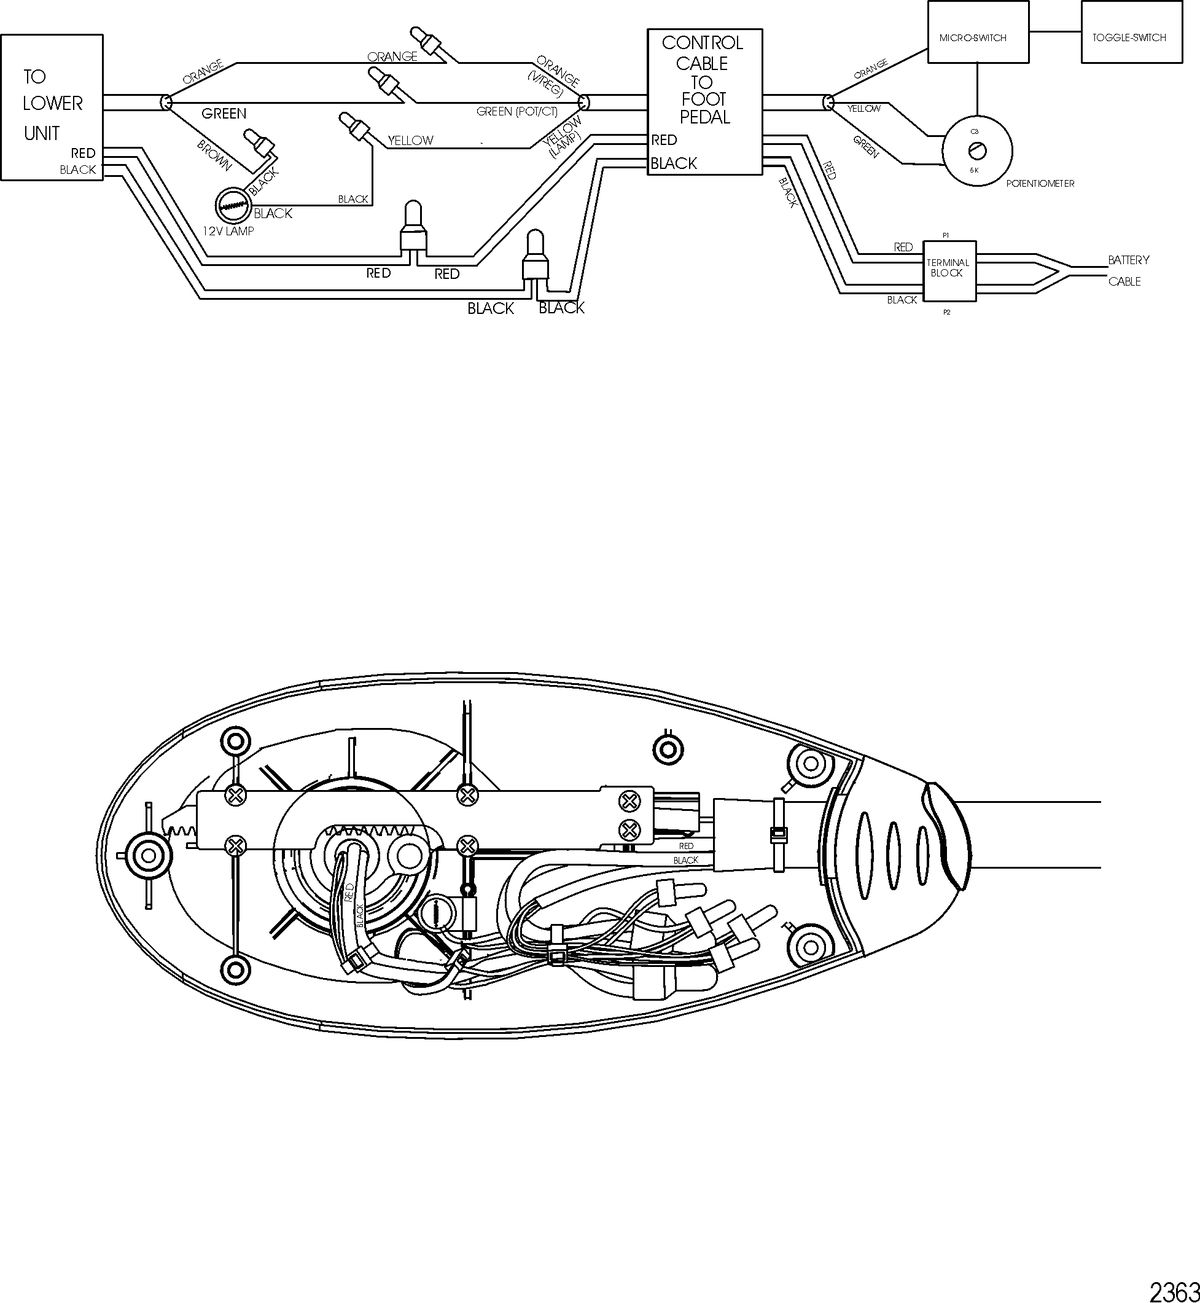 TROLLING MOTOR MOTORGUIDE FRESH WATER SERIES Wire Diagram(Model FW54FBD)